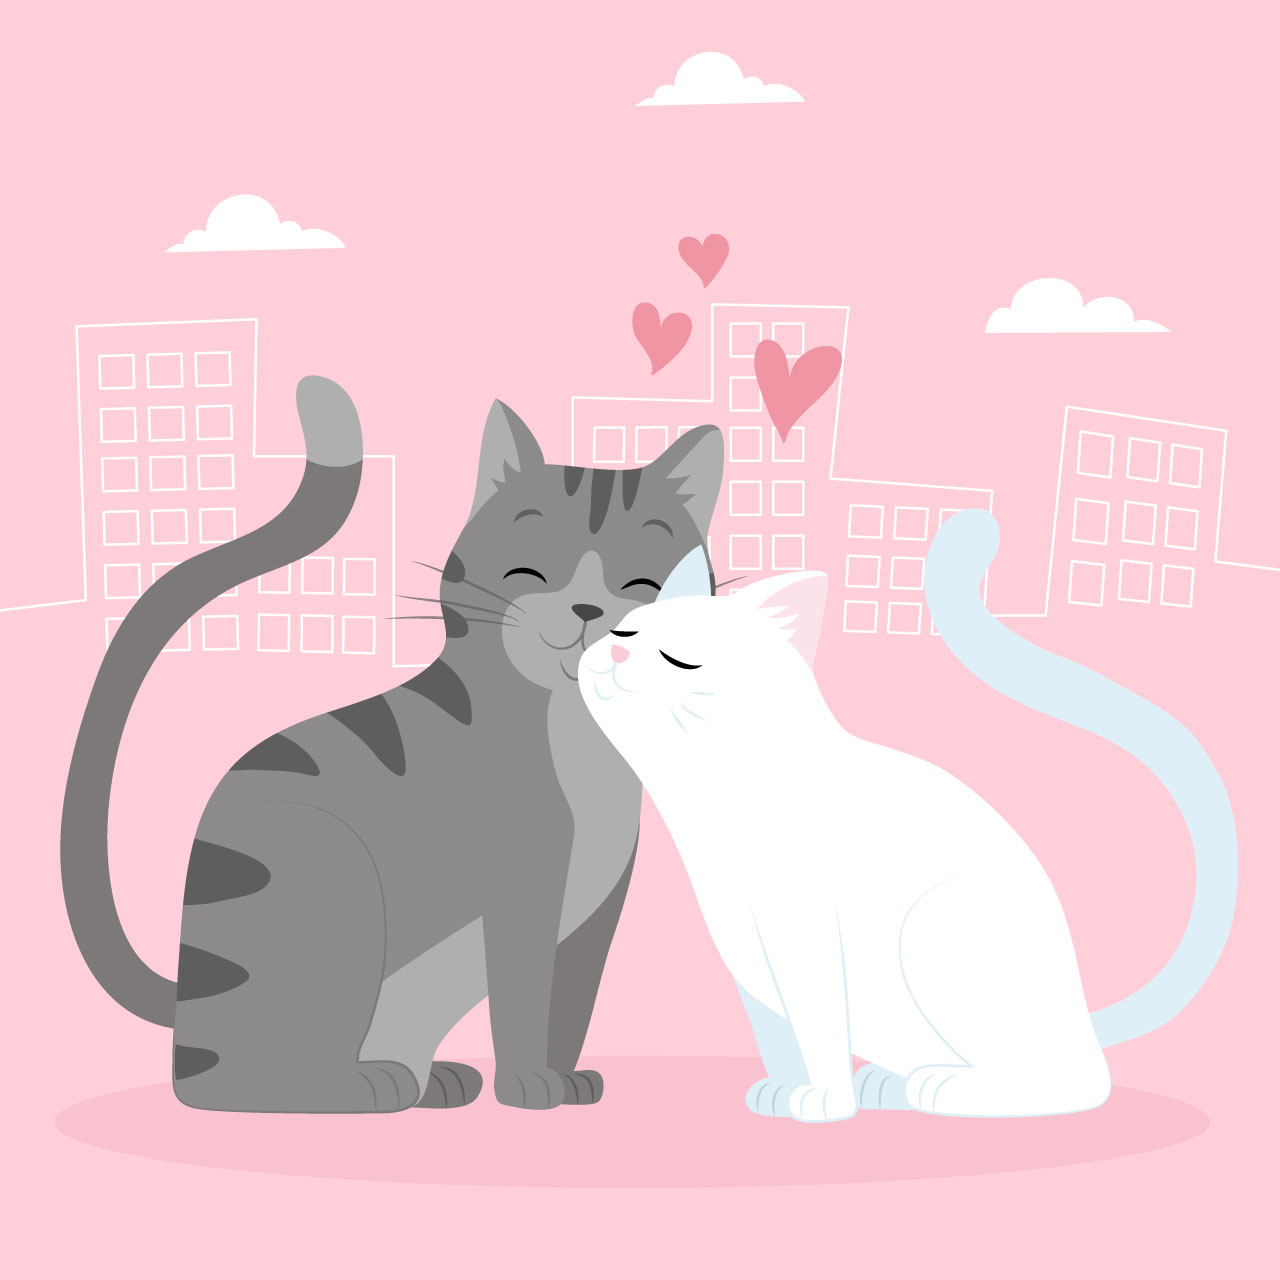 Hand drawn valentines day cartoon illustration image animal couple